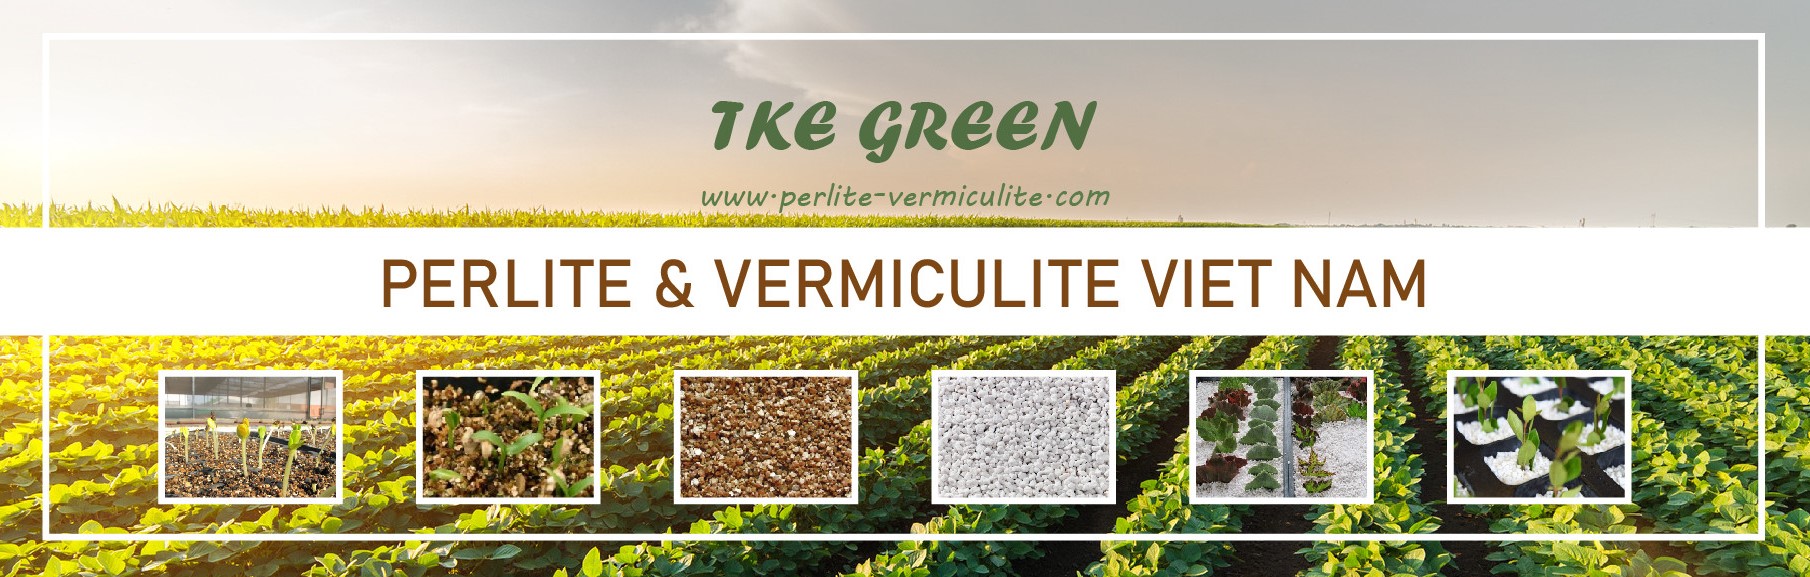 perlite-vermiculite-TKE-green-2